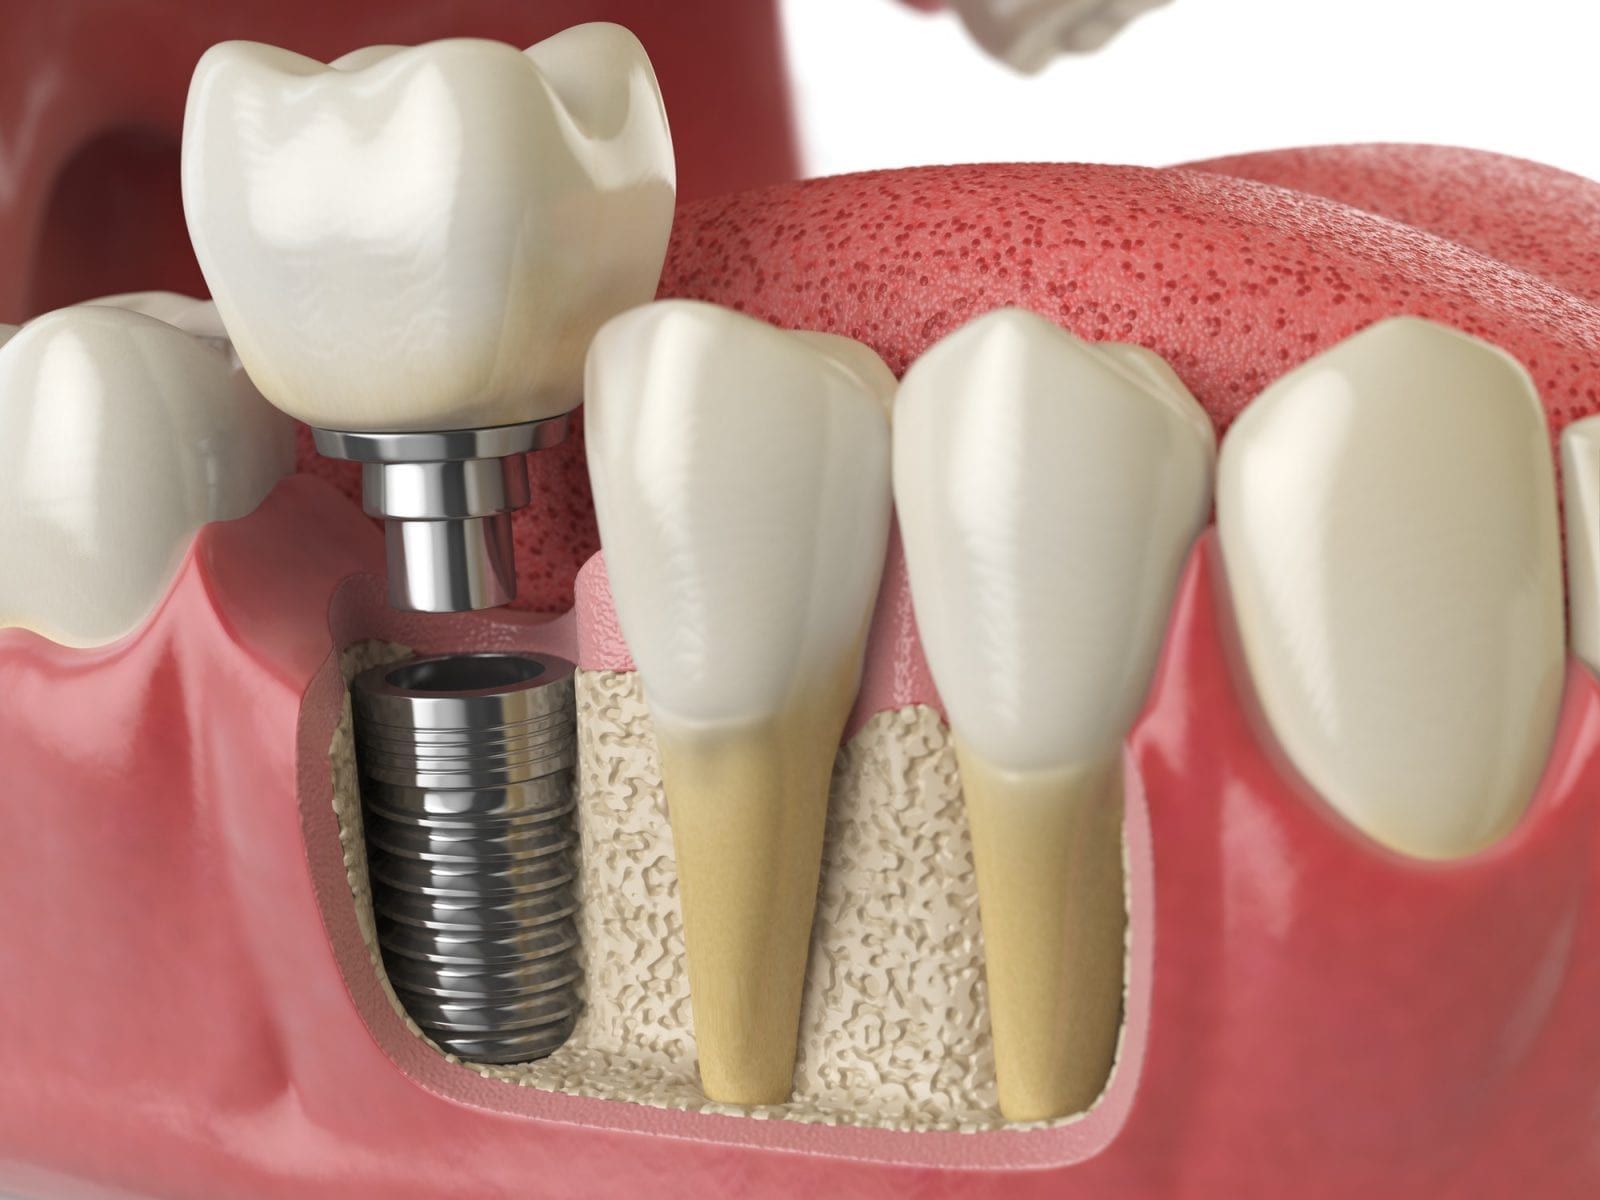 Anatomy Of Healthy Teeth And Tooth Dental Implant In Human Dentu 1600x1200